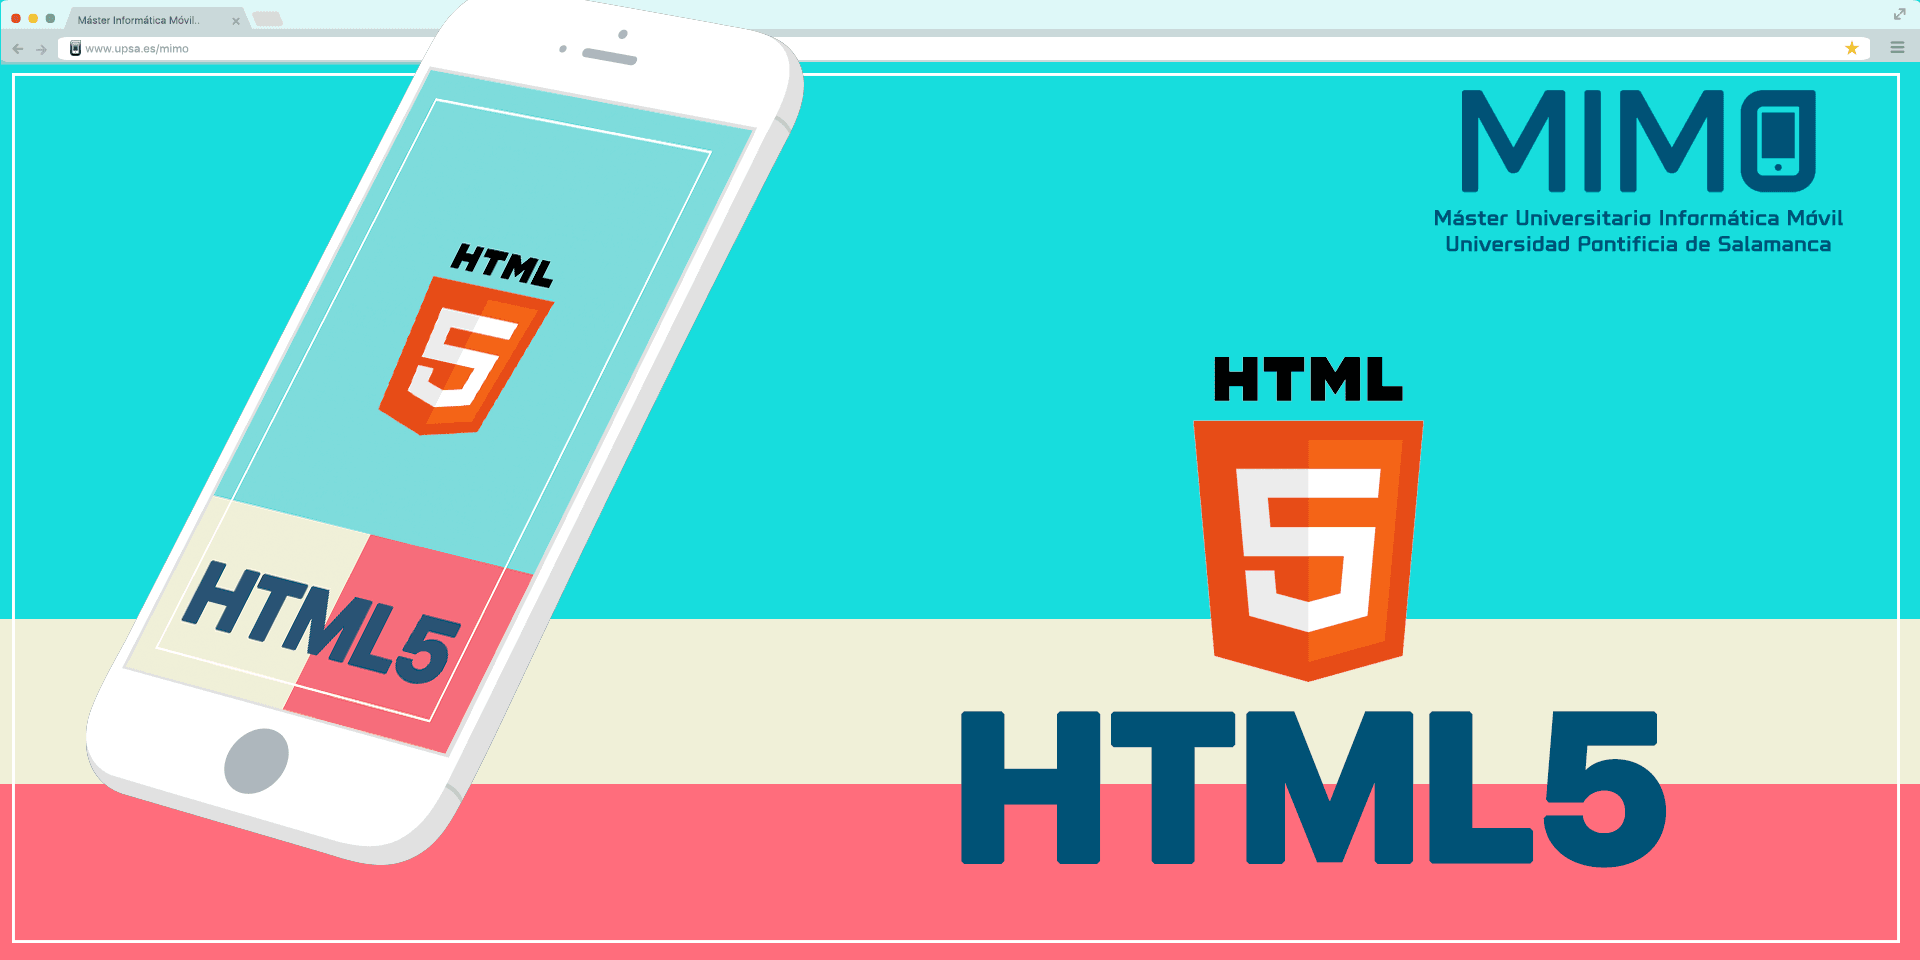 Master MIMO HTML5